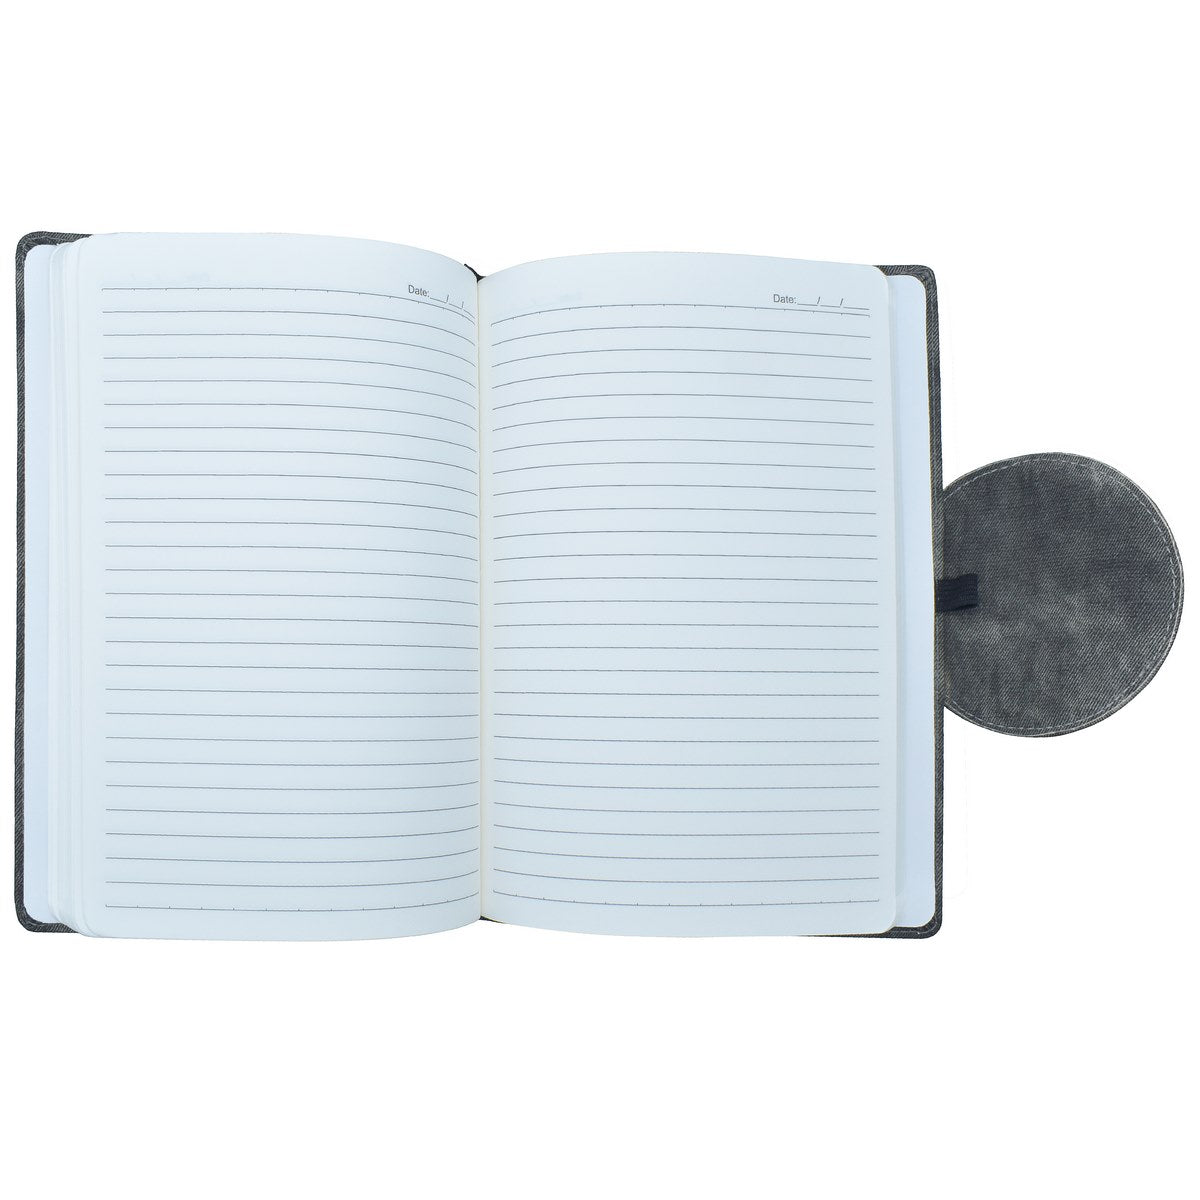 jags-mumbai Notebooks & Diaries Note book Diary A5 Jeans Cloth Black